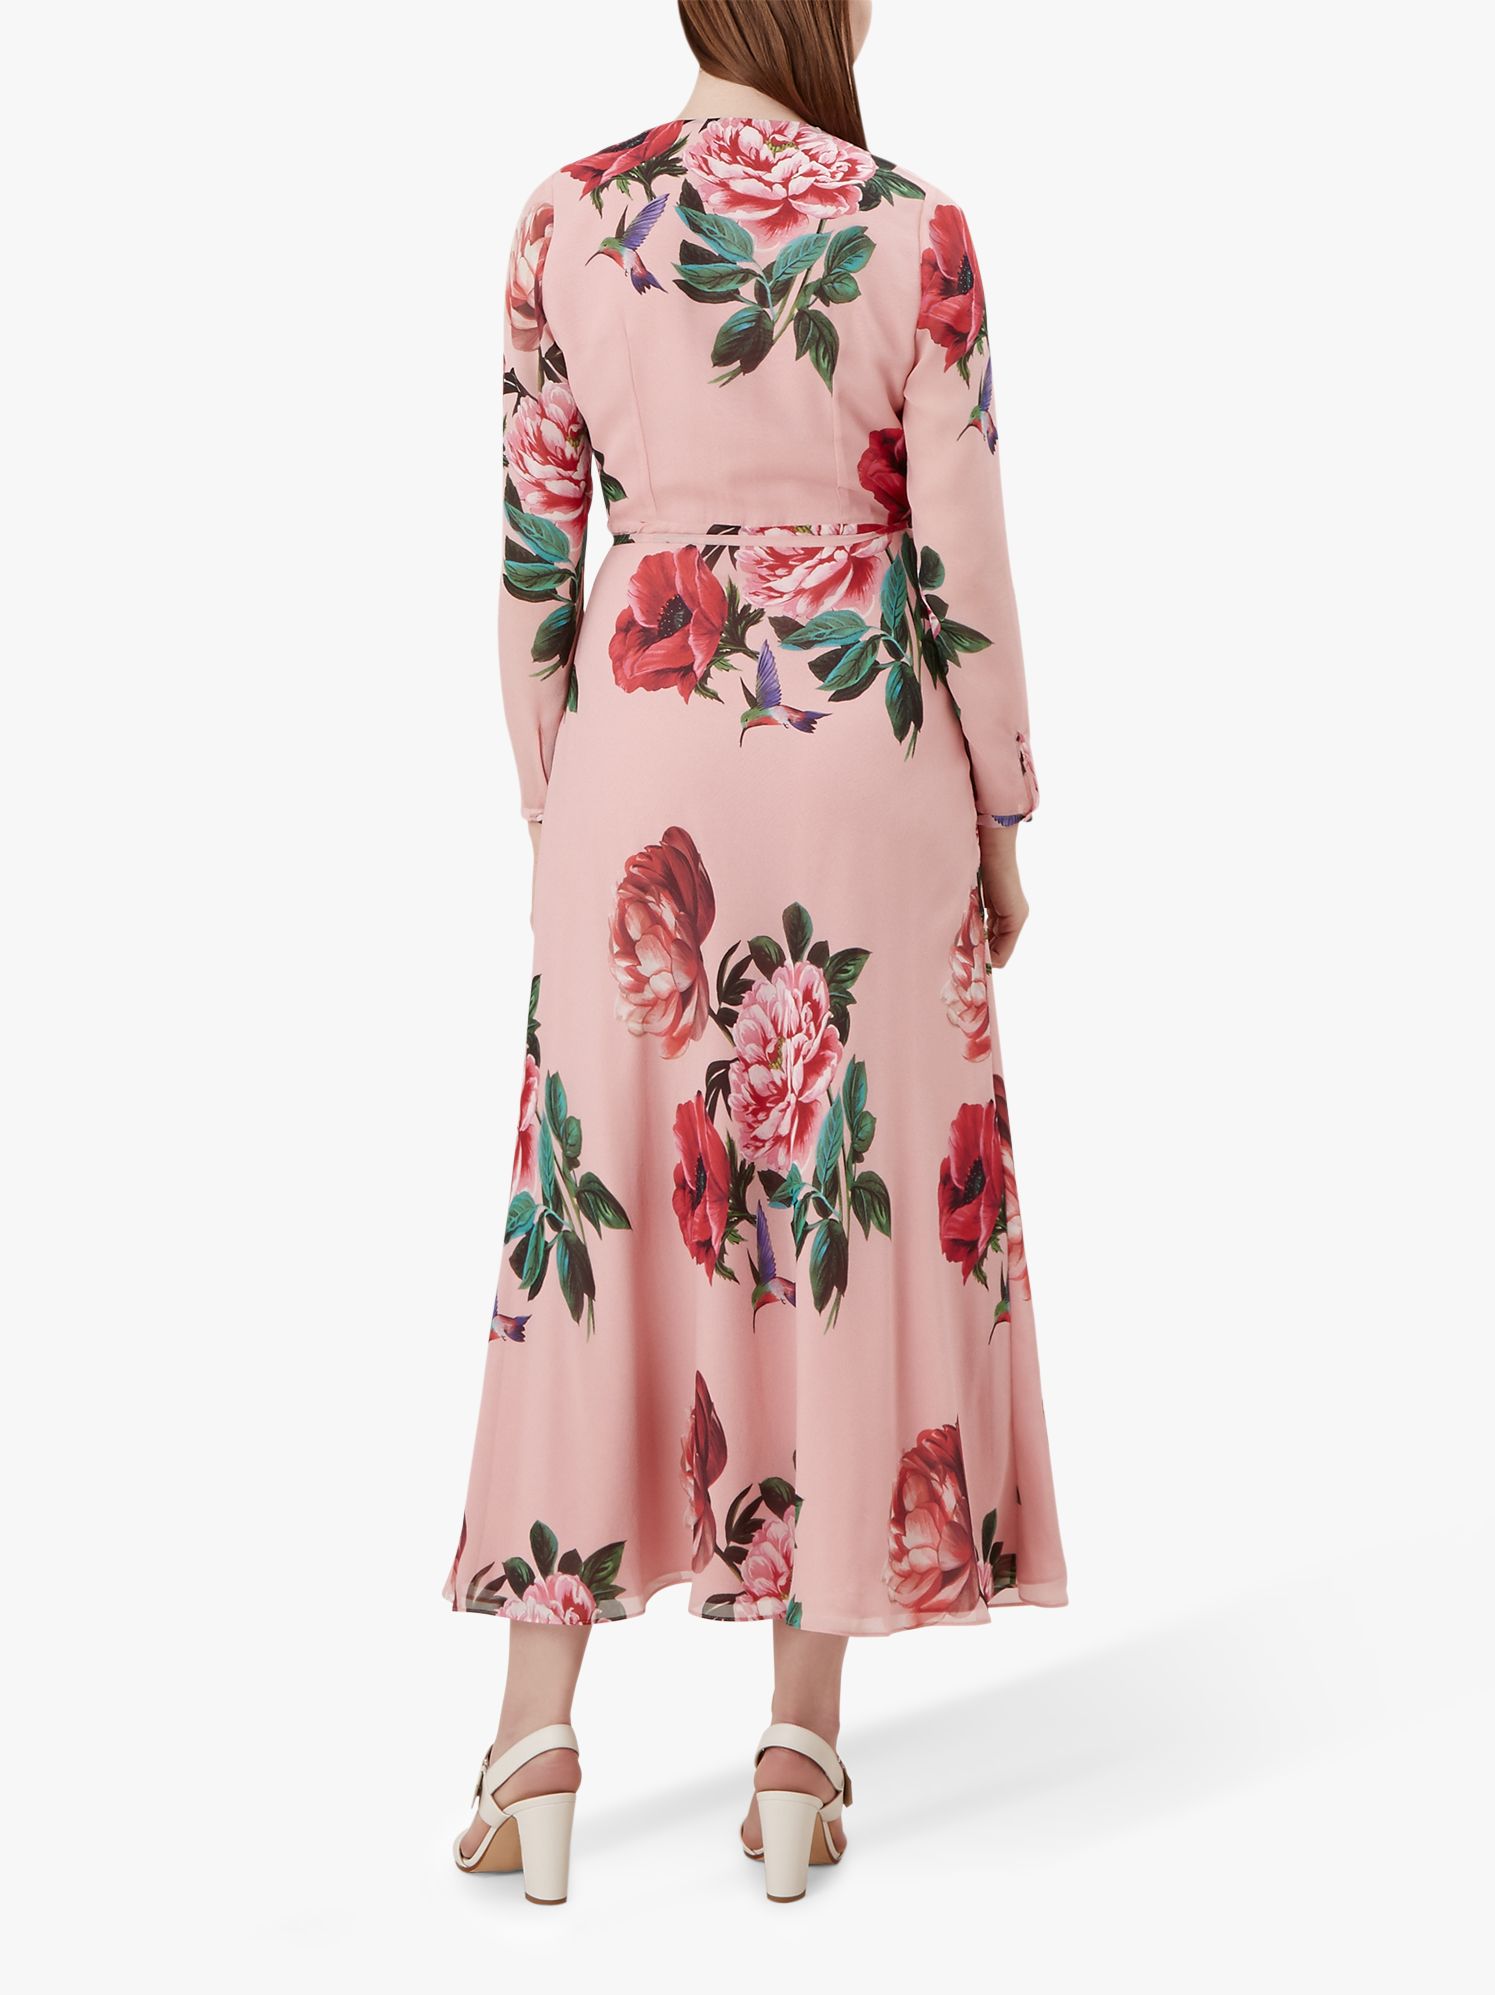 Hobbs Emery Floral Dress, Pink/Multi at John Lewis & Partners